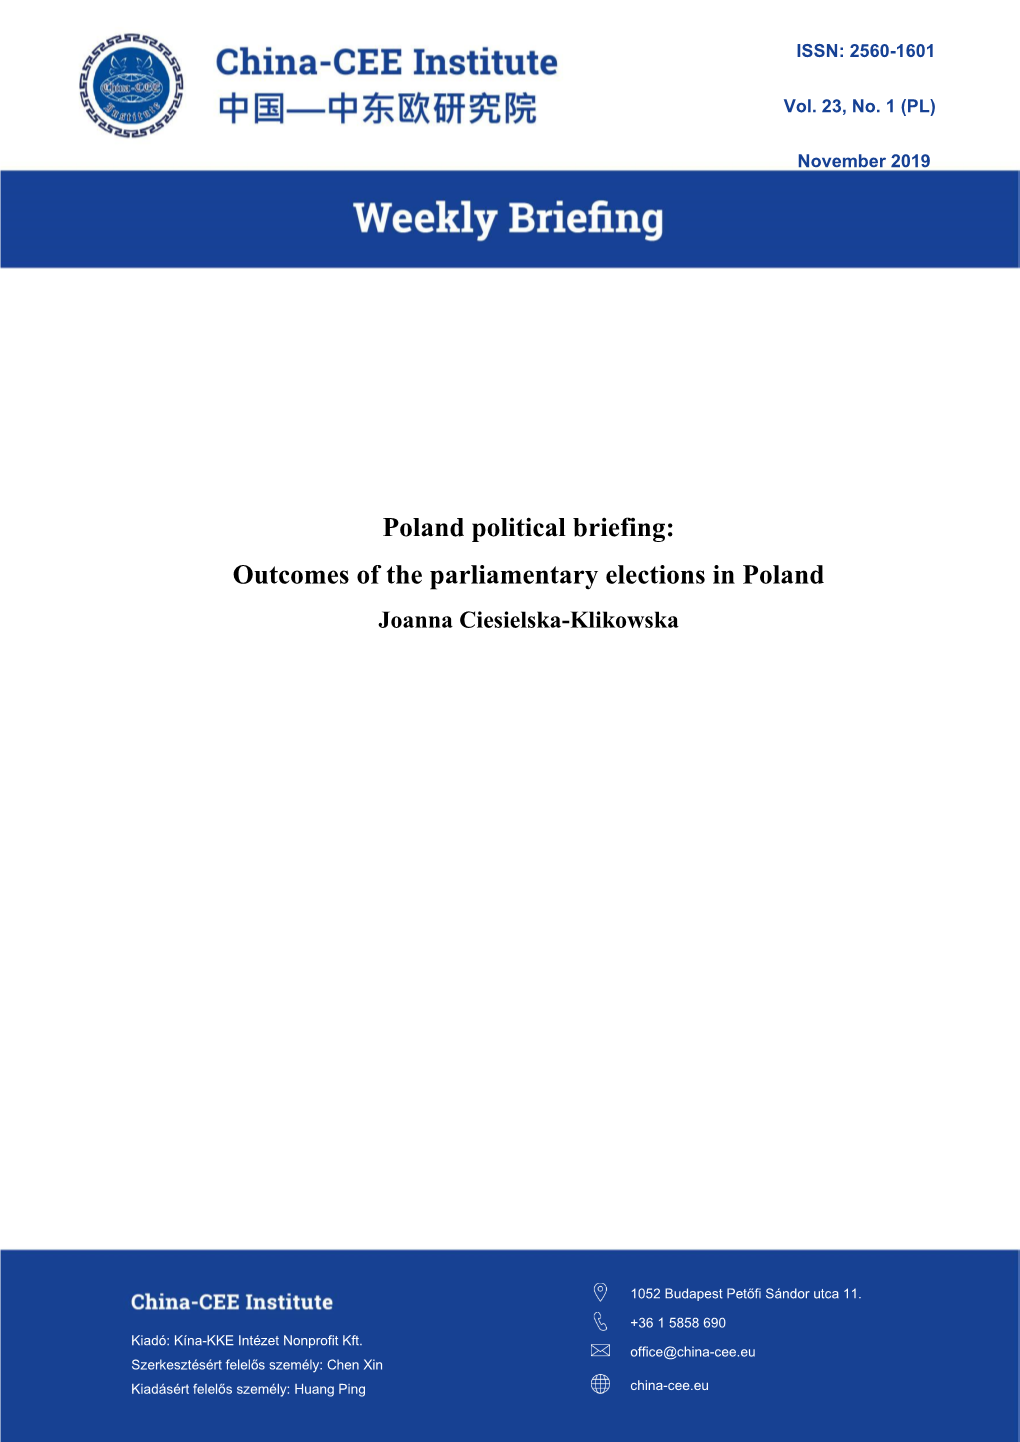 Poland Political Briefing: Outcomes of the Parliamentary Elections in Poland Joanna Ciesielska-Klikowska